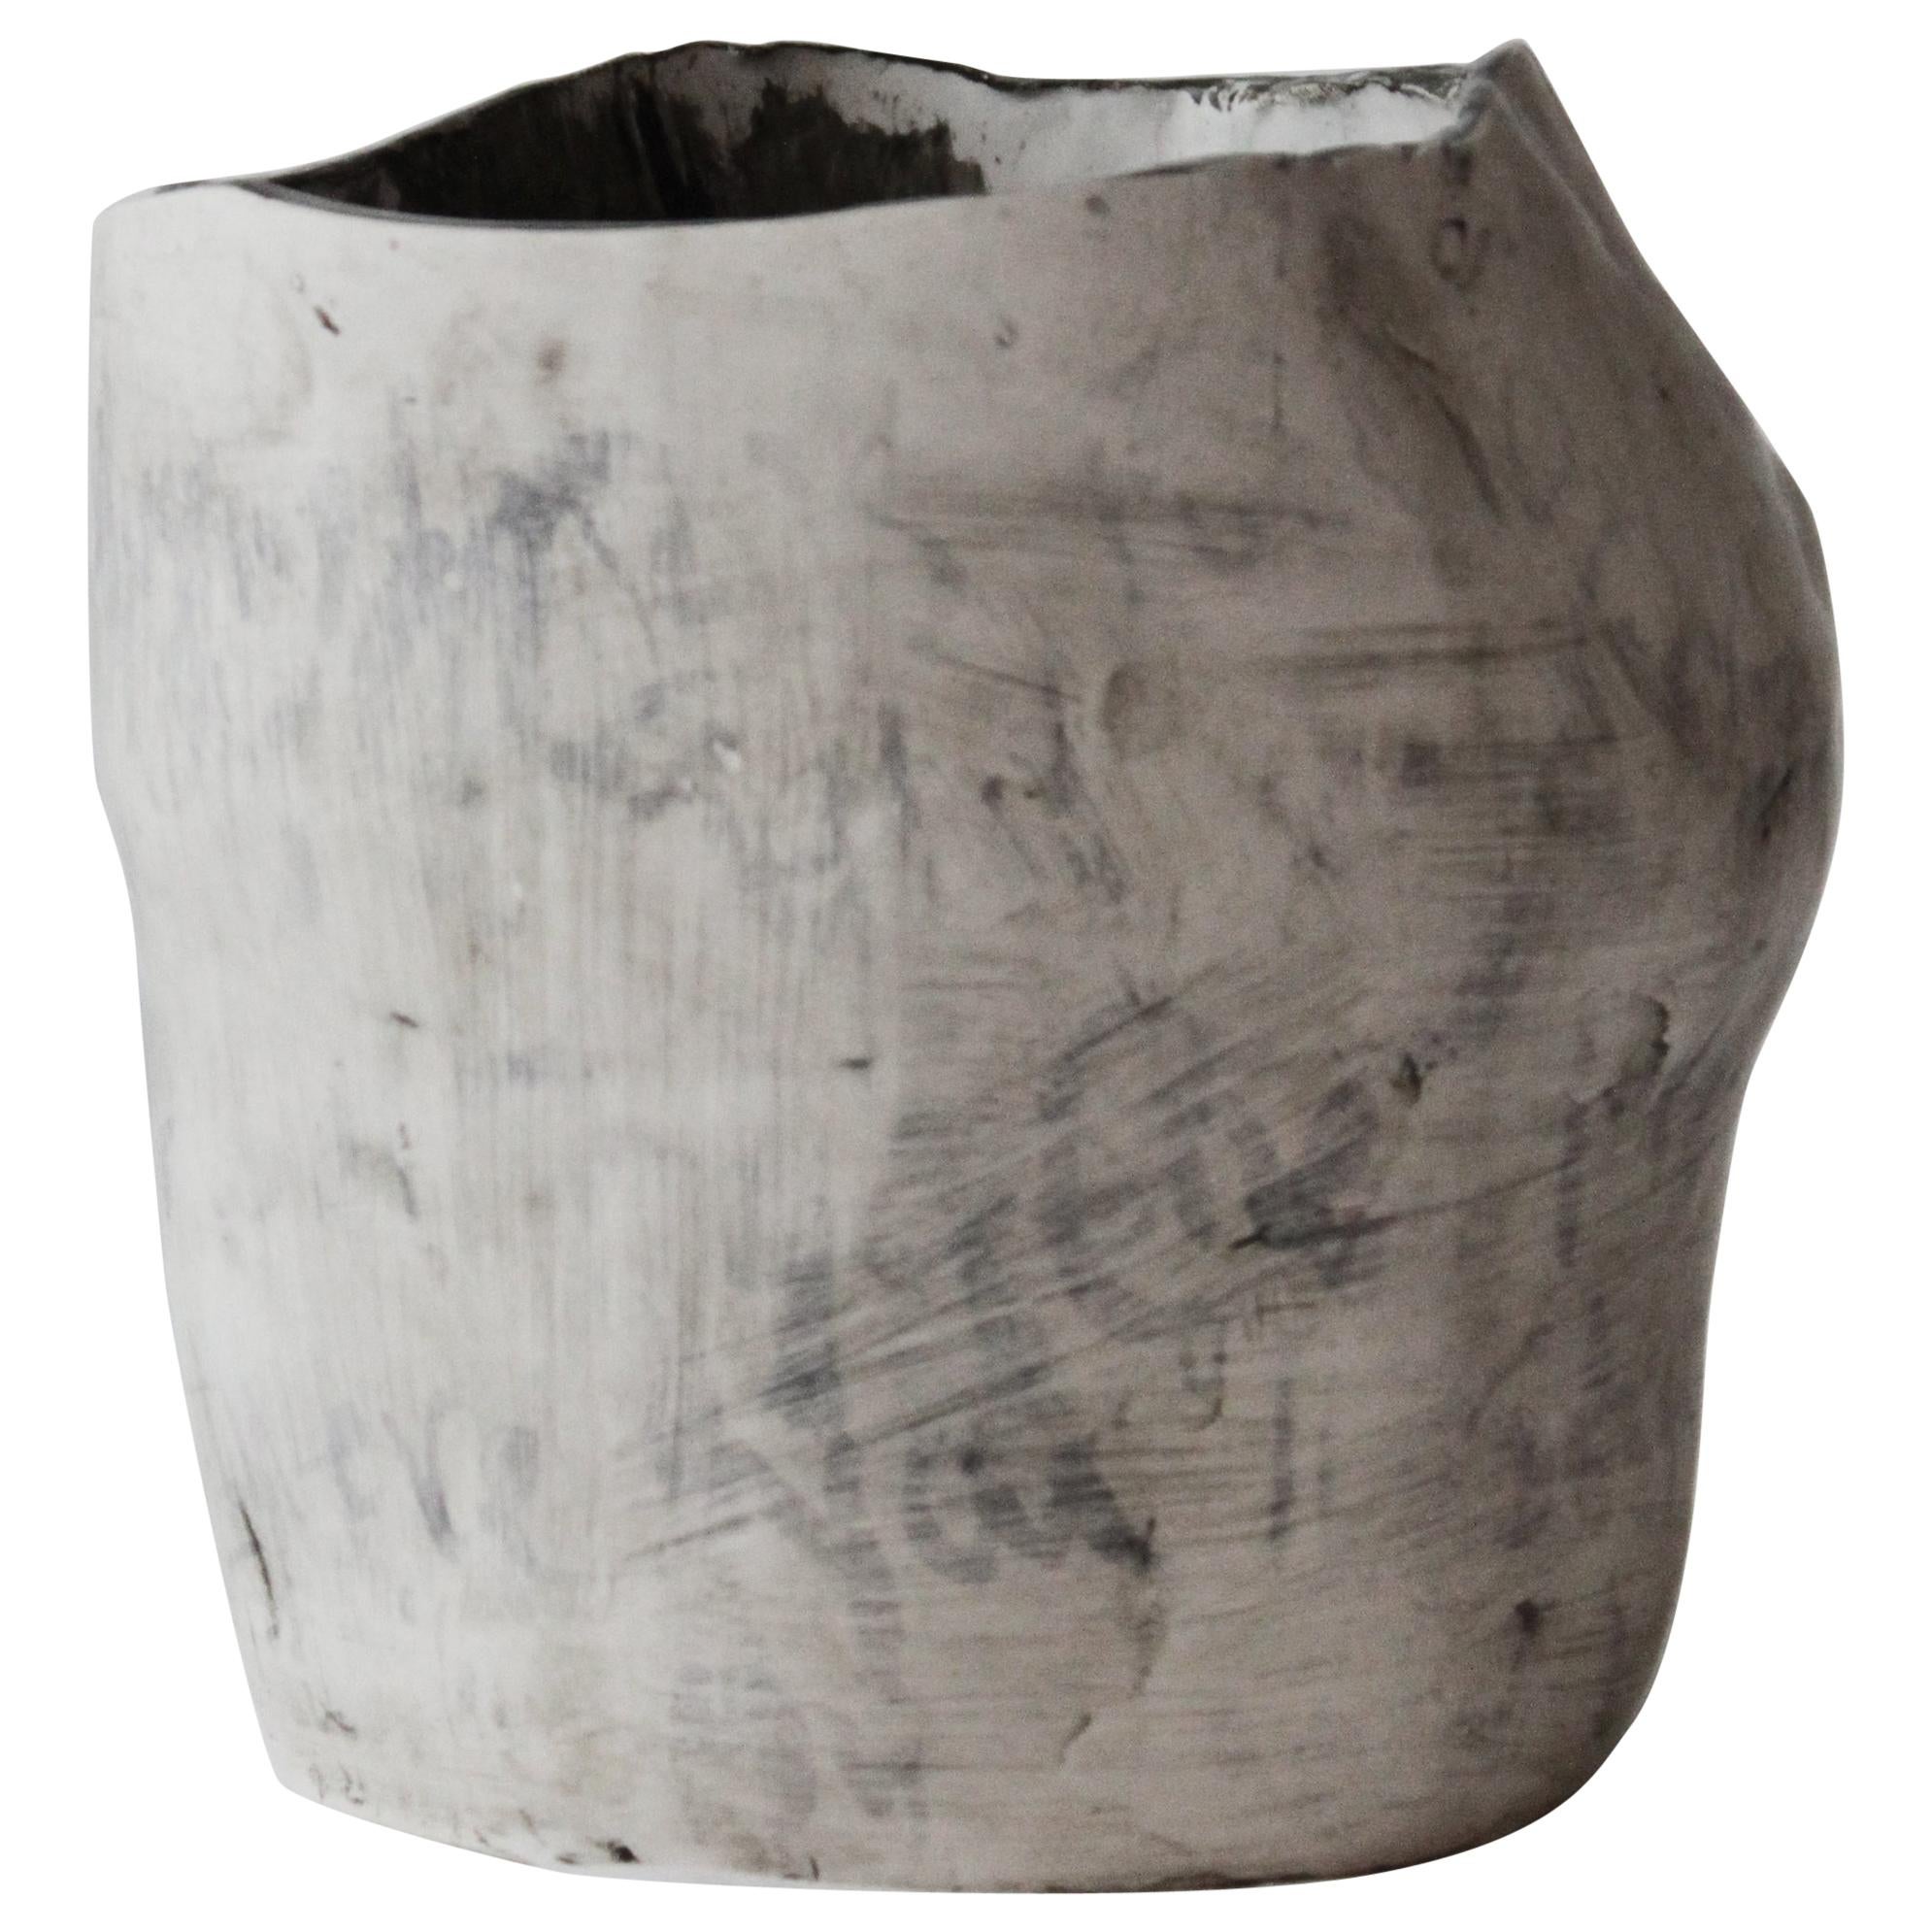 Glazed Stoneware Amorphia L Vase by Lava Studio Ceramics